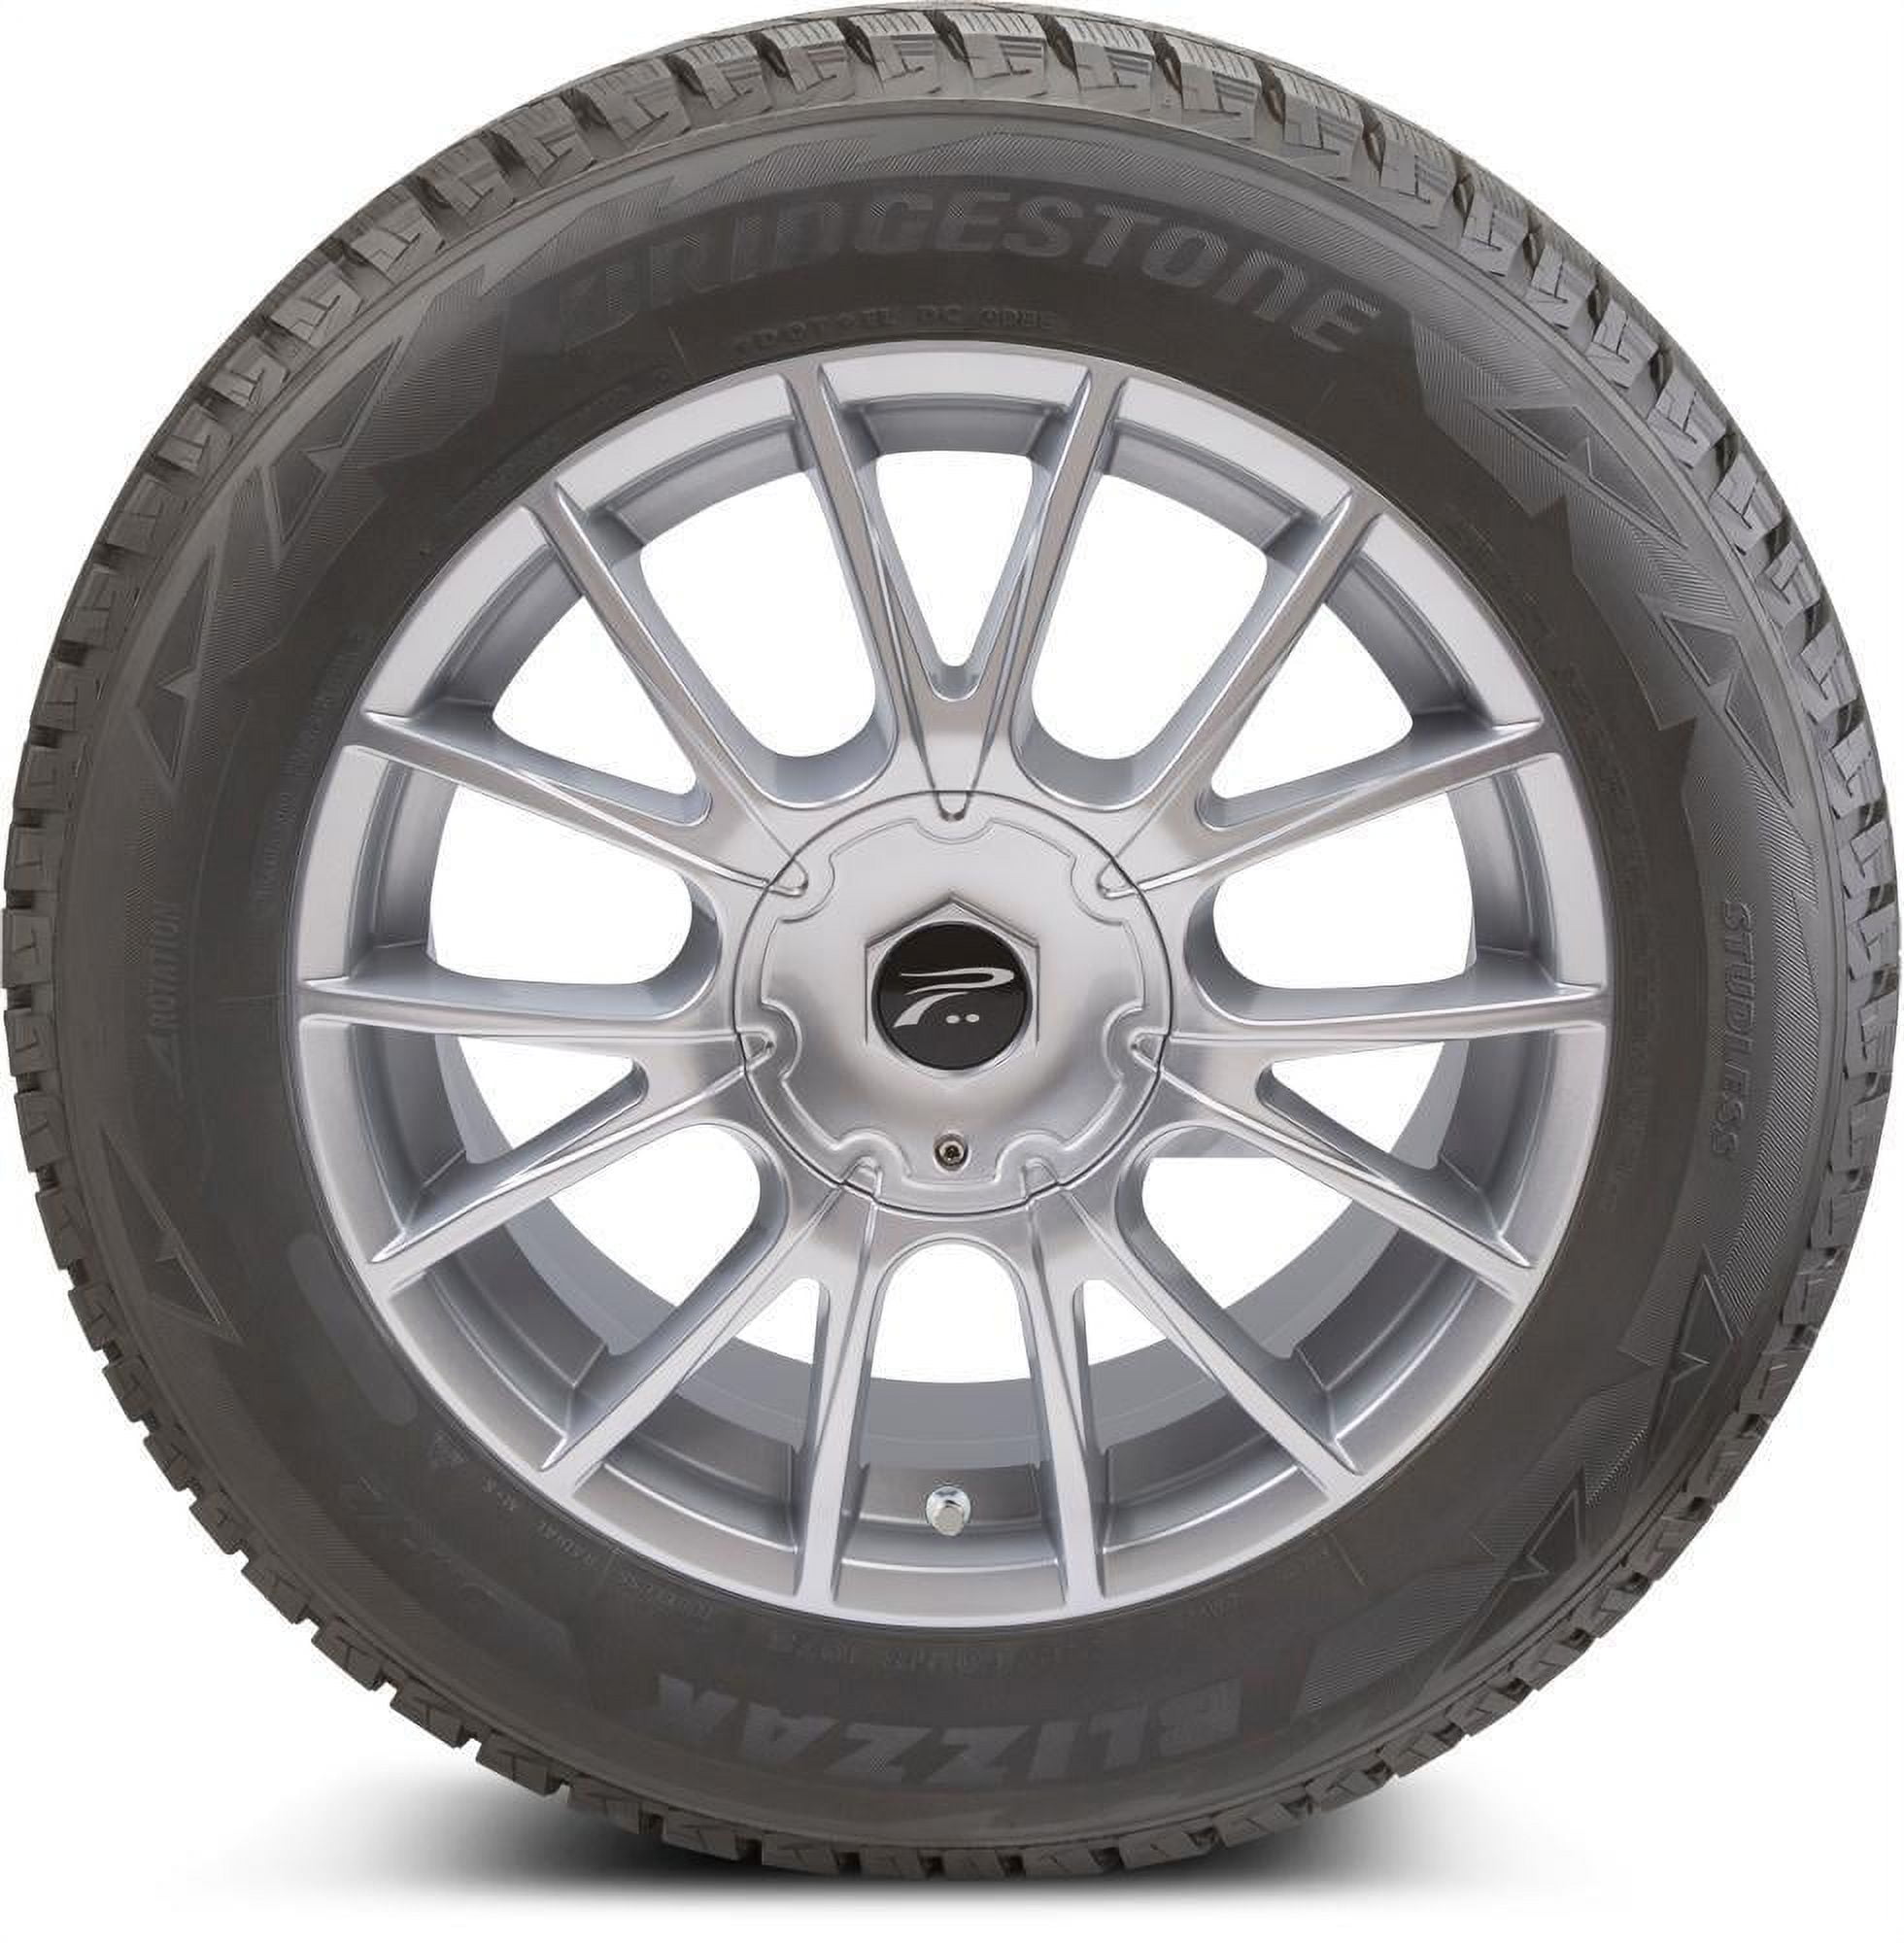 Bridgestone winter dm-v2 blizzak bsw LT285/60R18 tire 116R